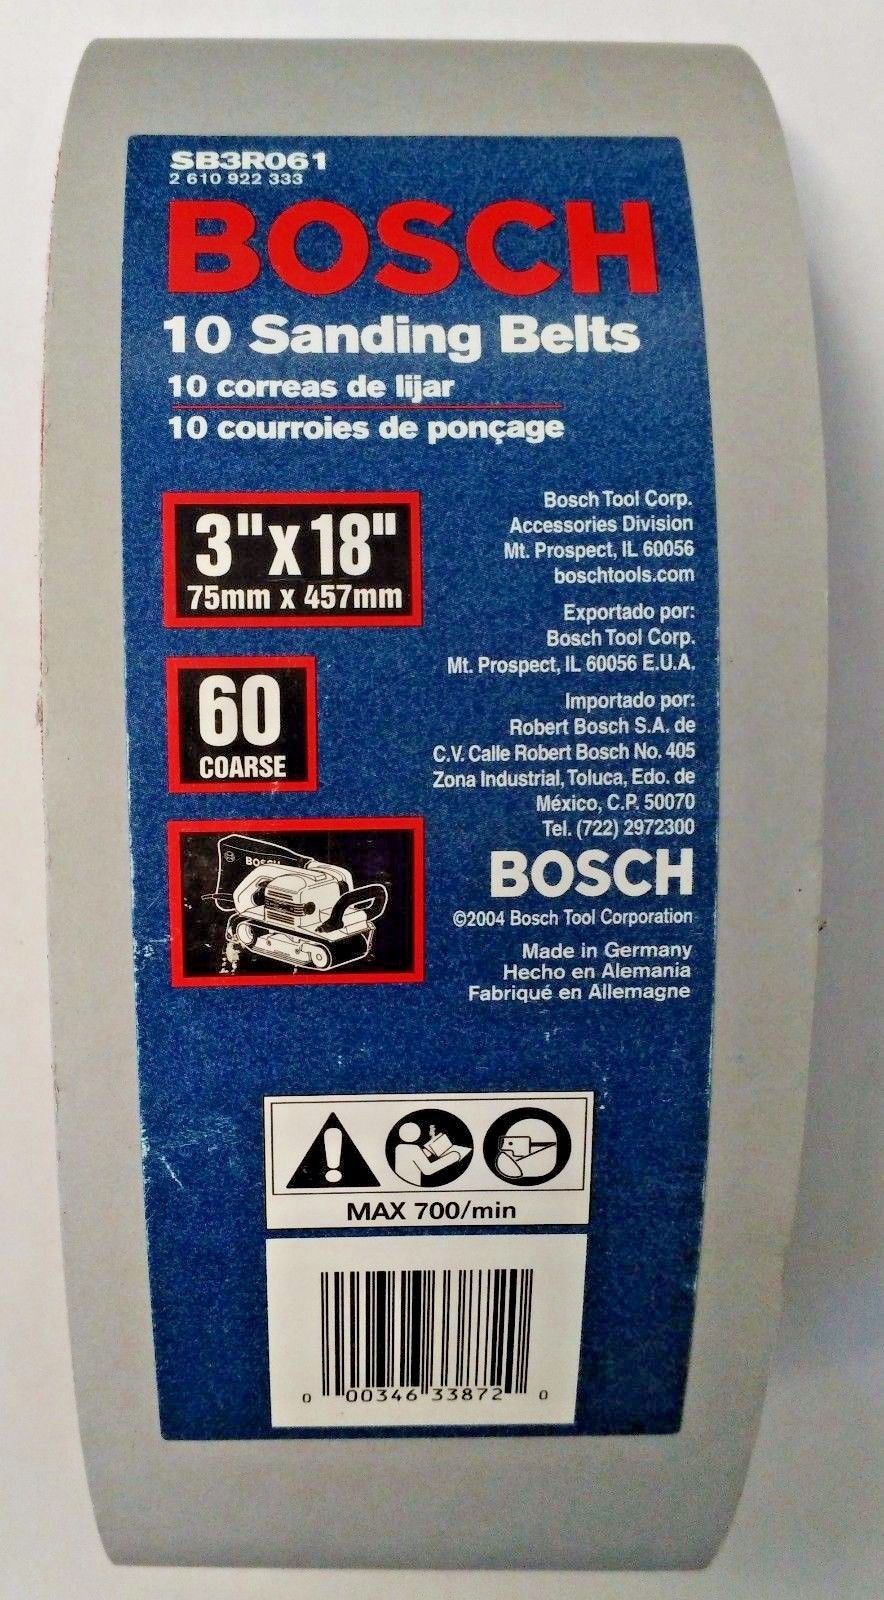 Bosch SB3R061 3" x 18"  60 Grit Red Sanding Belts 10 Pack